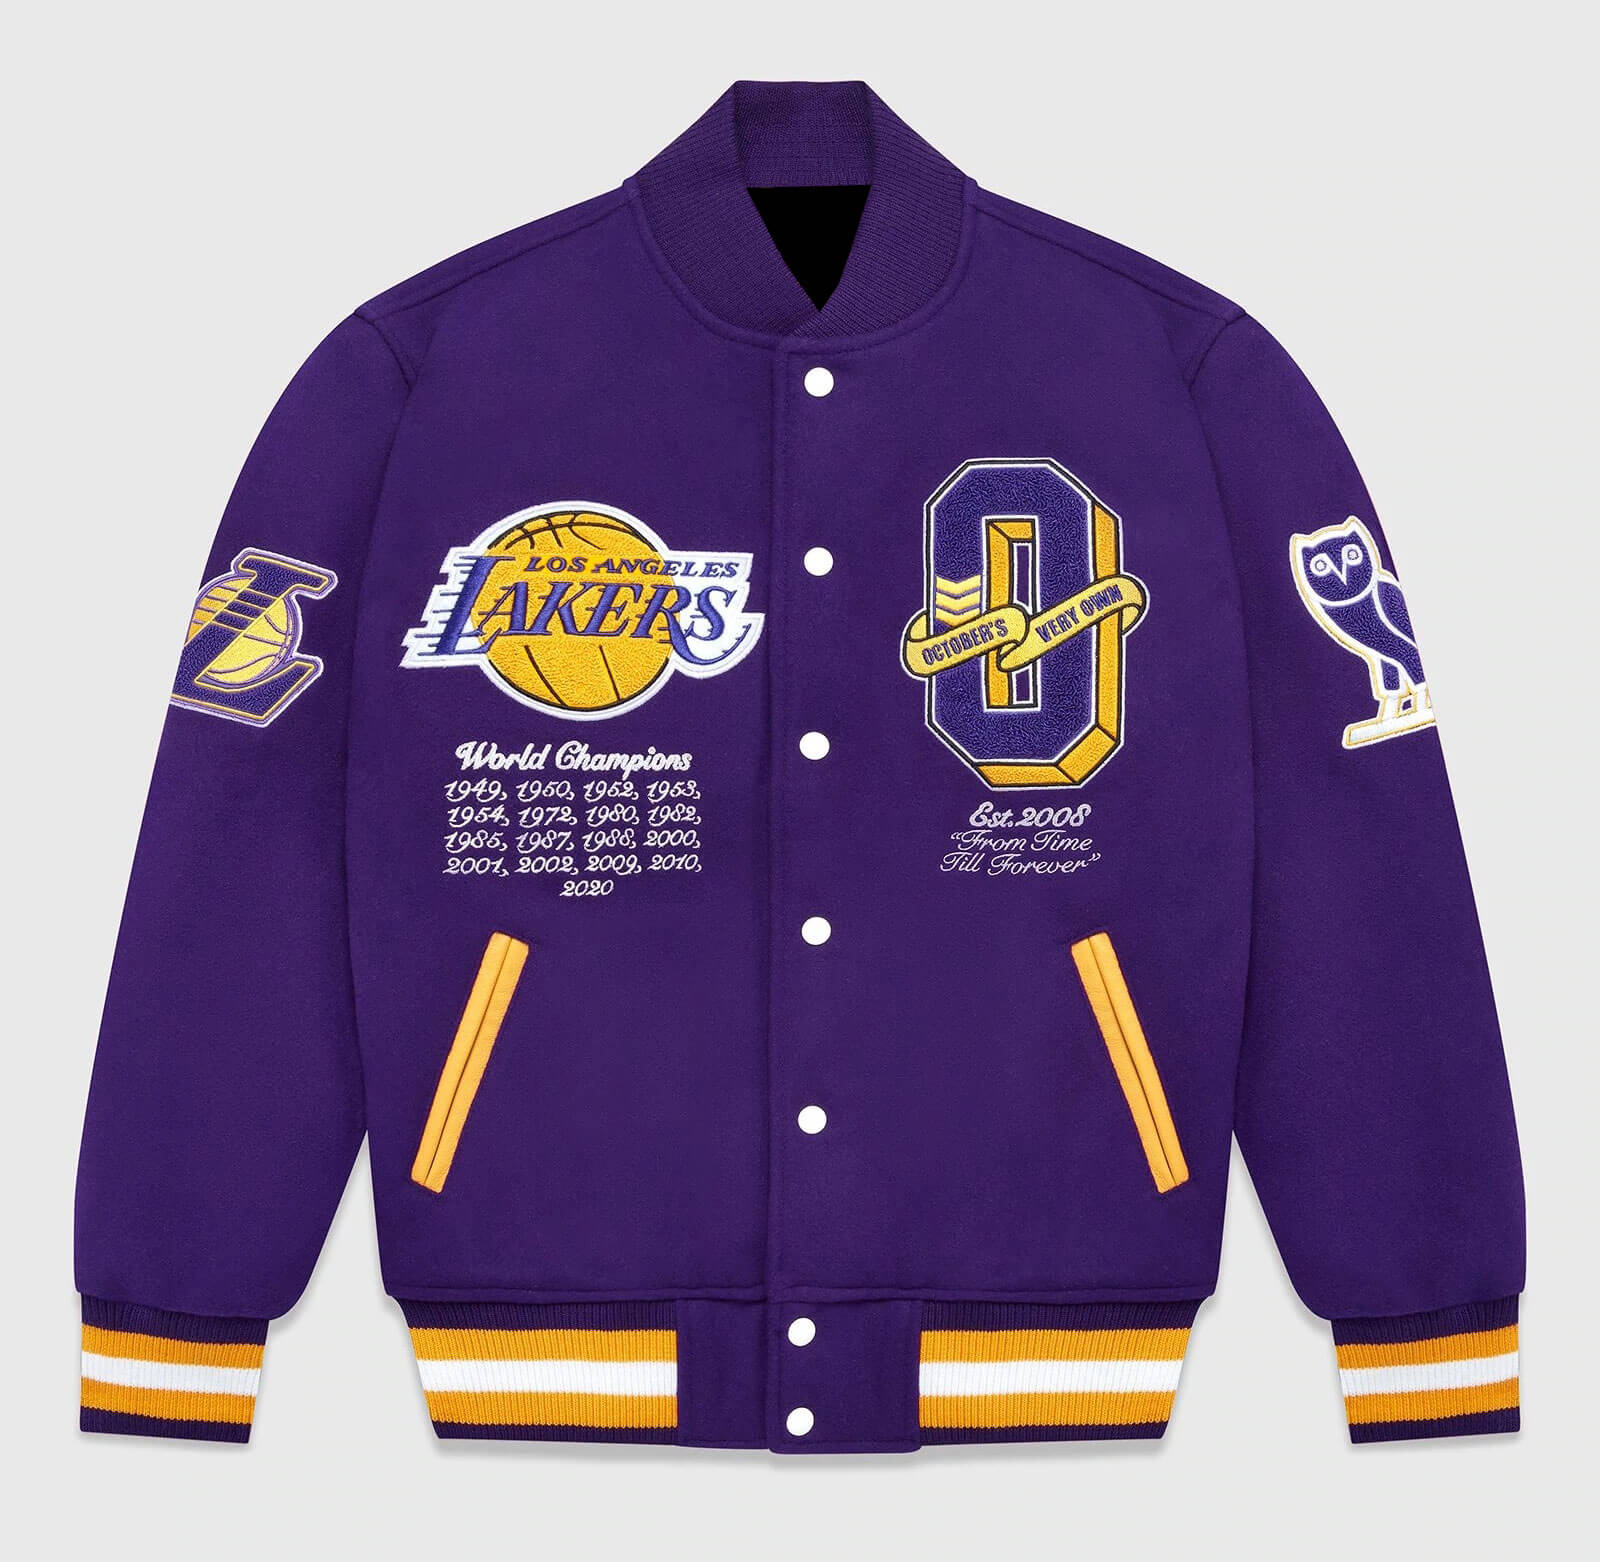 Off White/Purple Los Angeles Lakers Retro Classic Varsity Jacket